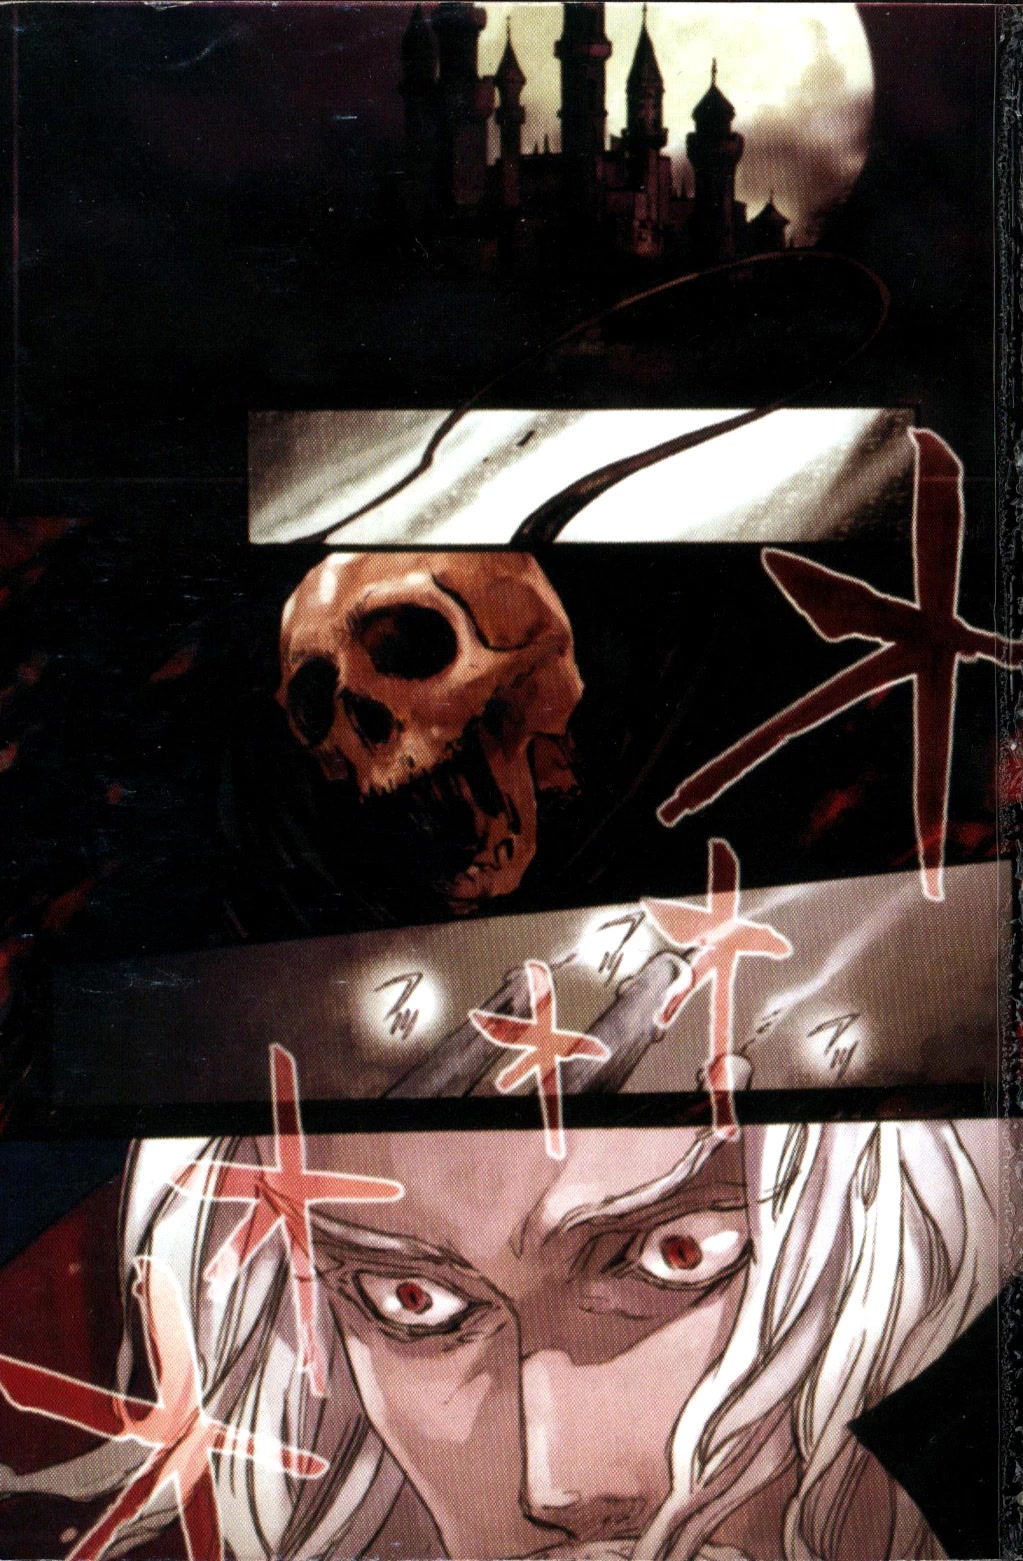 Castlevania - Curse Of Darkness - Page 2